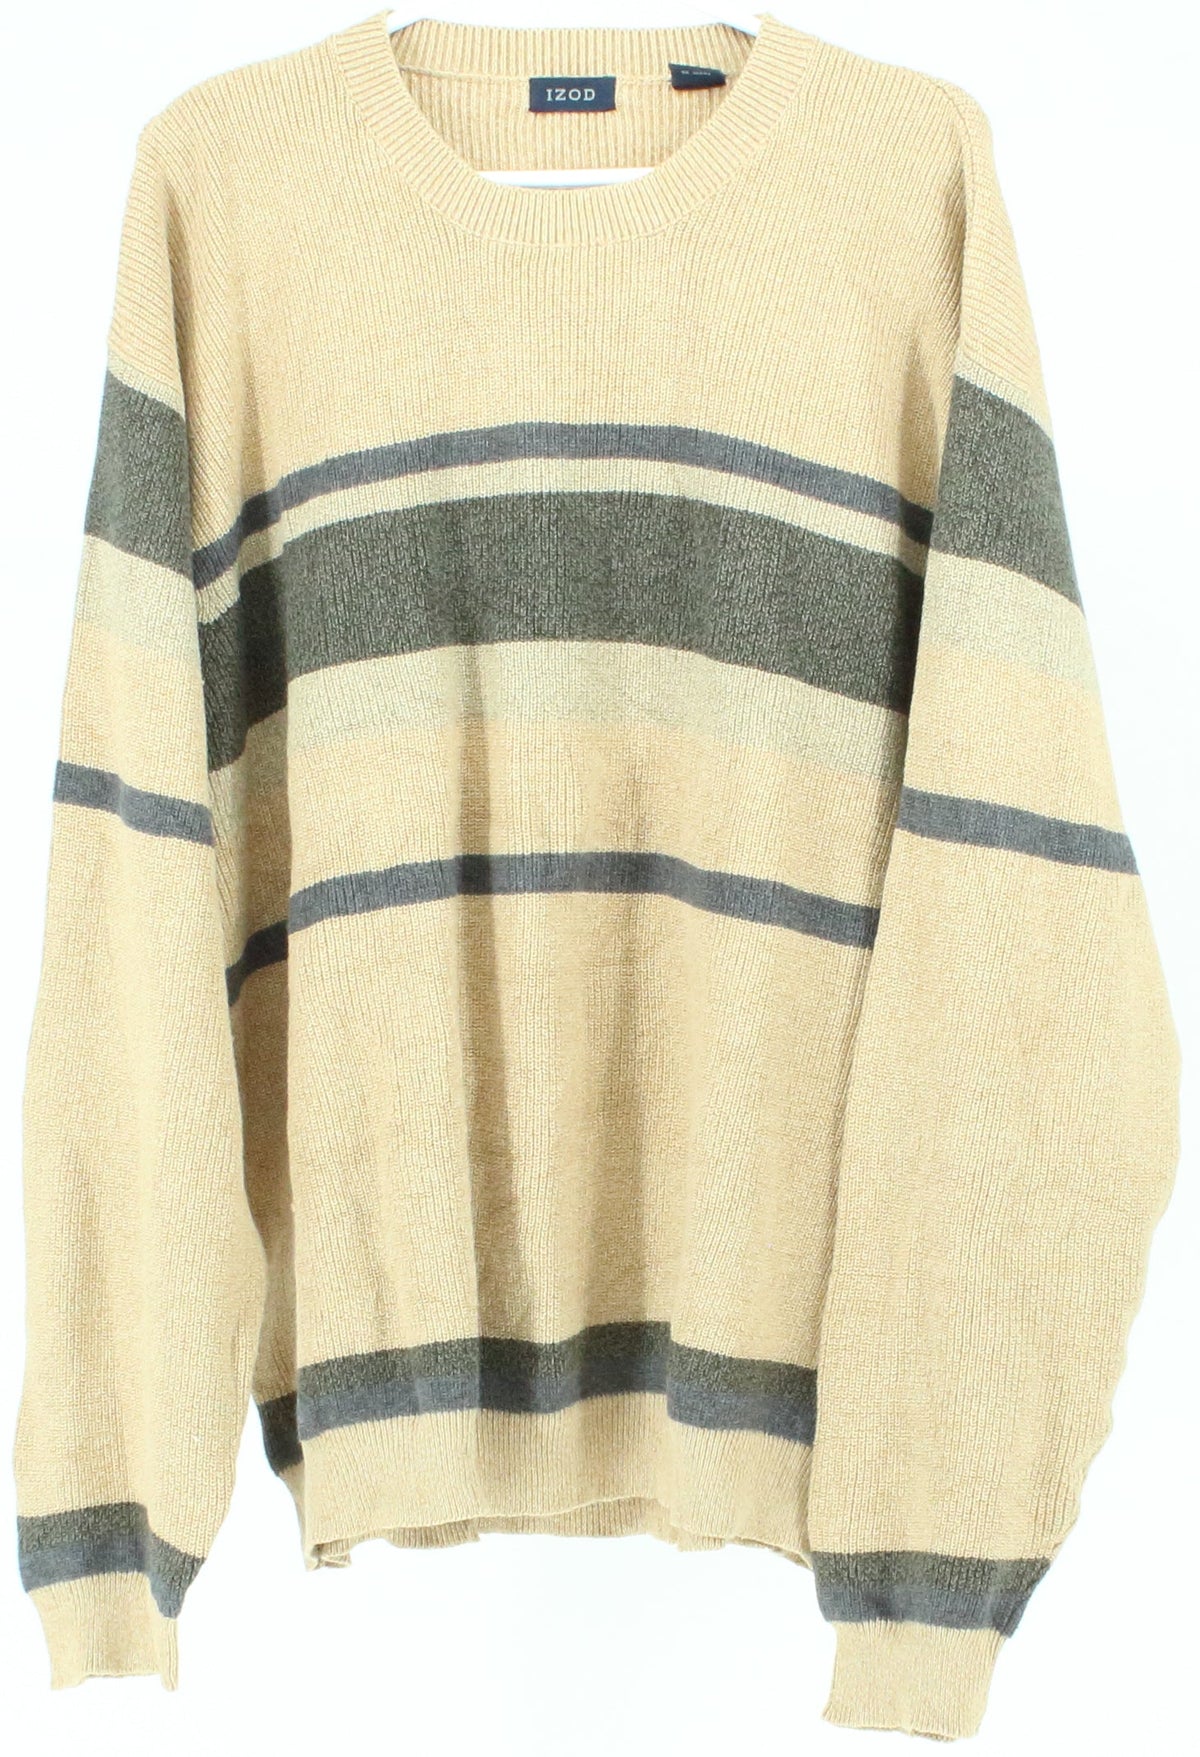 Izod Beige Blue and Green Striped Men's Sweater